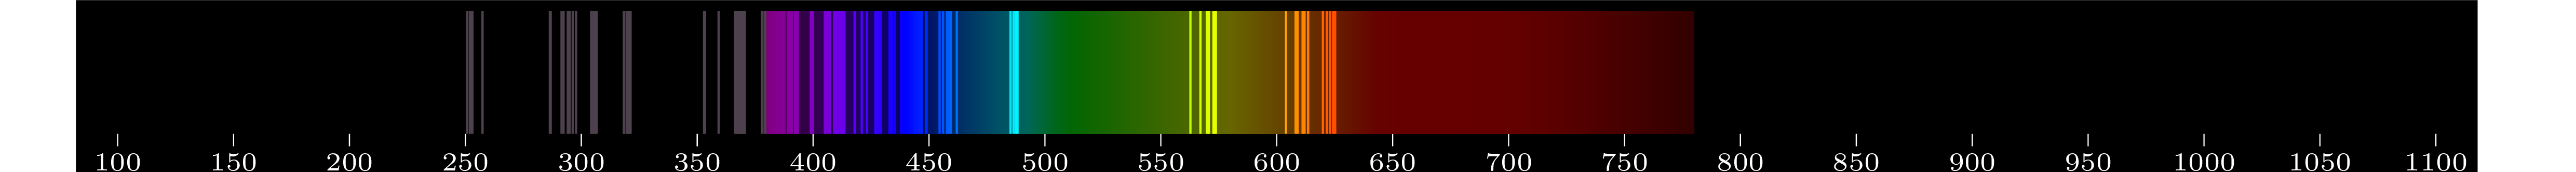 emmision spectra of element V